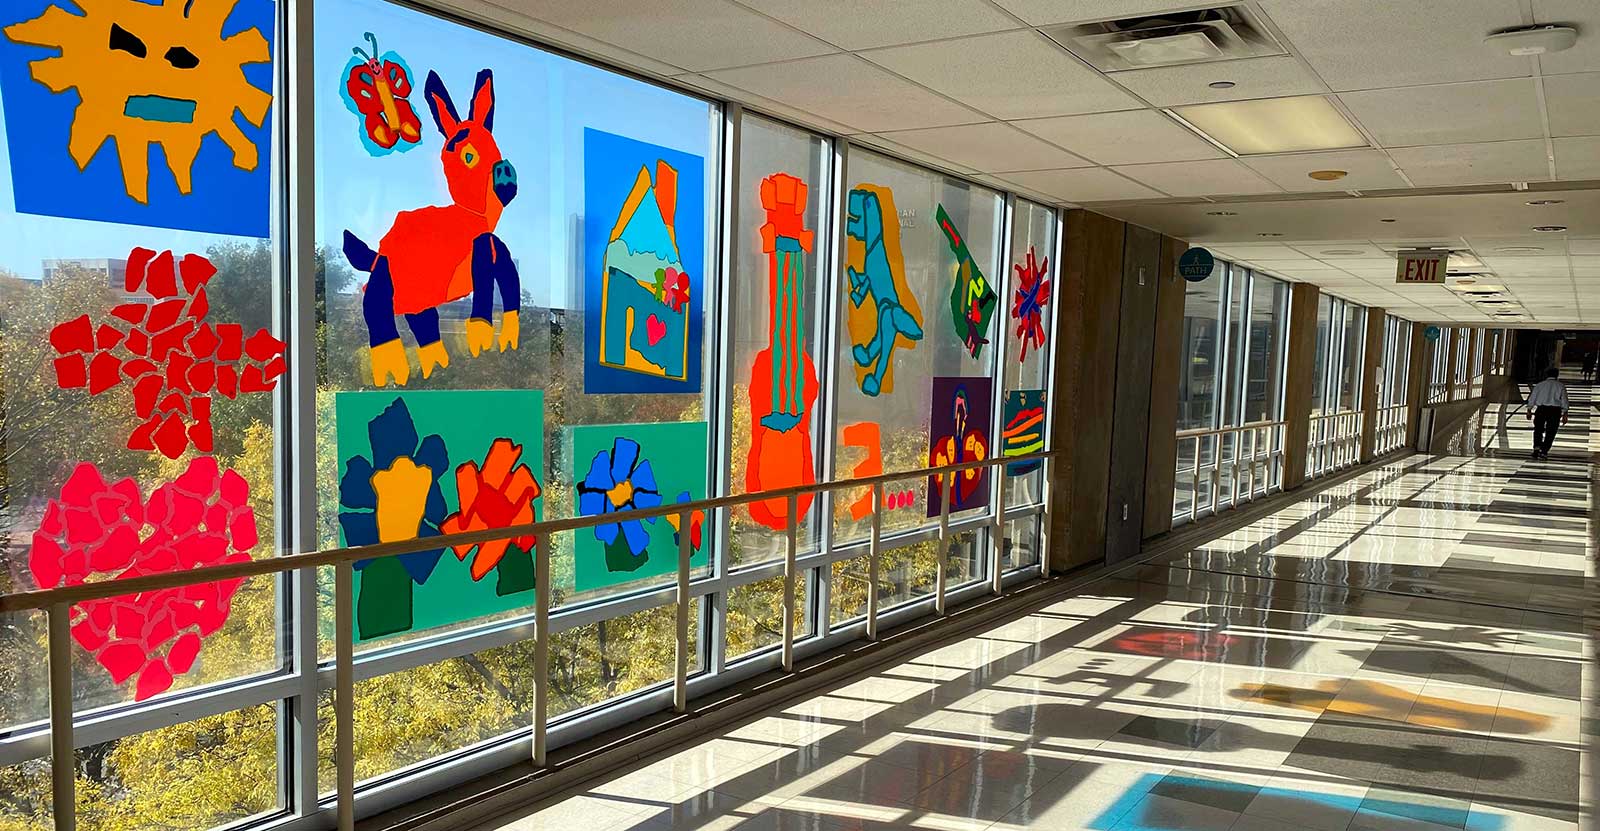 Colorful artwork decorates a long hallway of windows